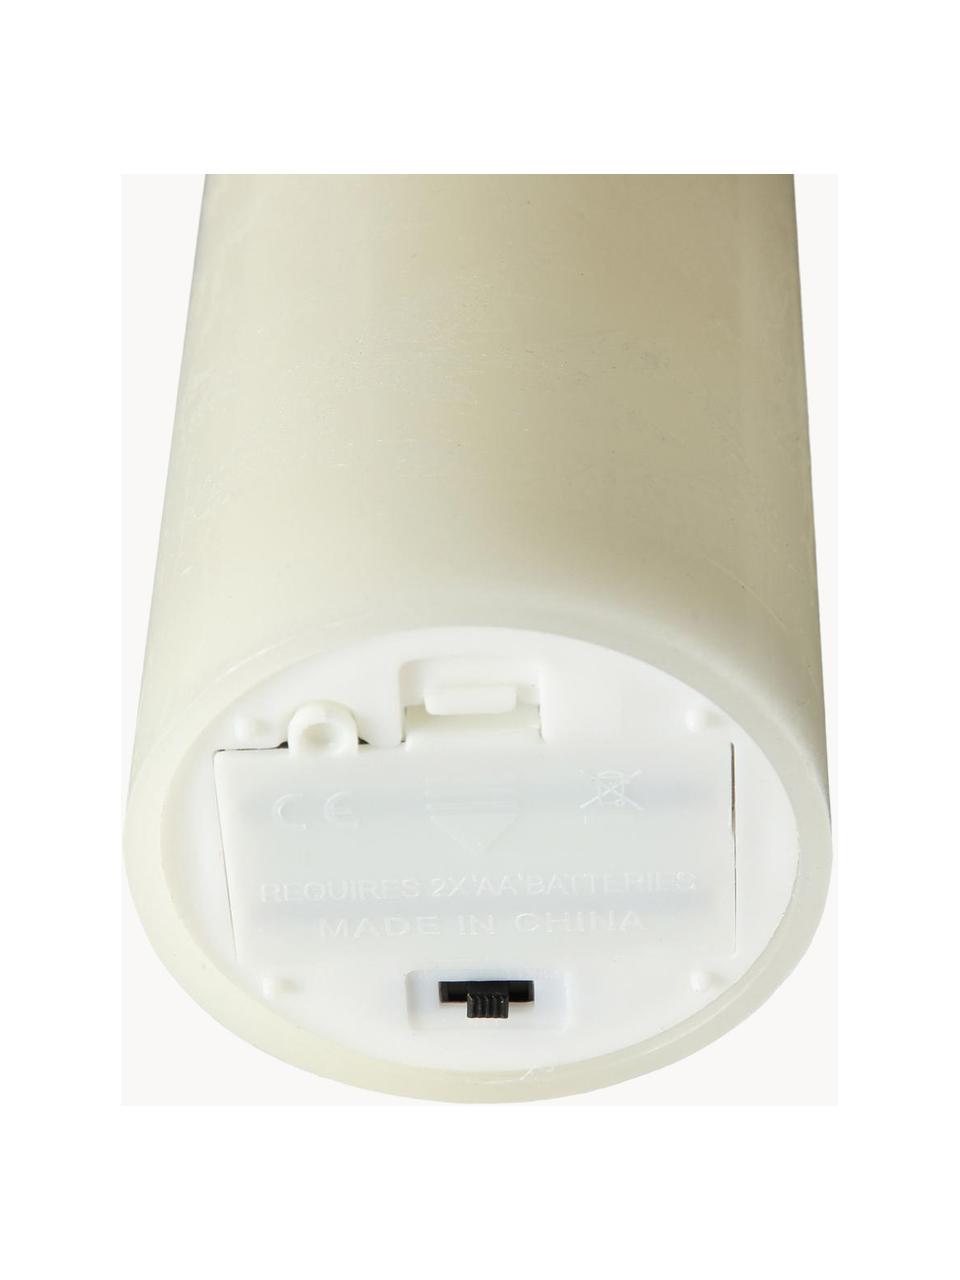 LED-Kerze Bino mit Flackerfunktion, H 12 cm, Cremeweiss, Ø 8 x H 12 cm